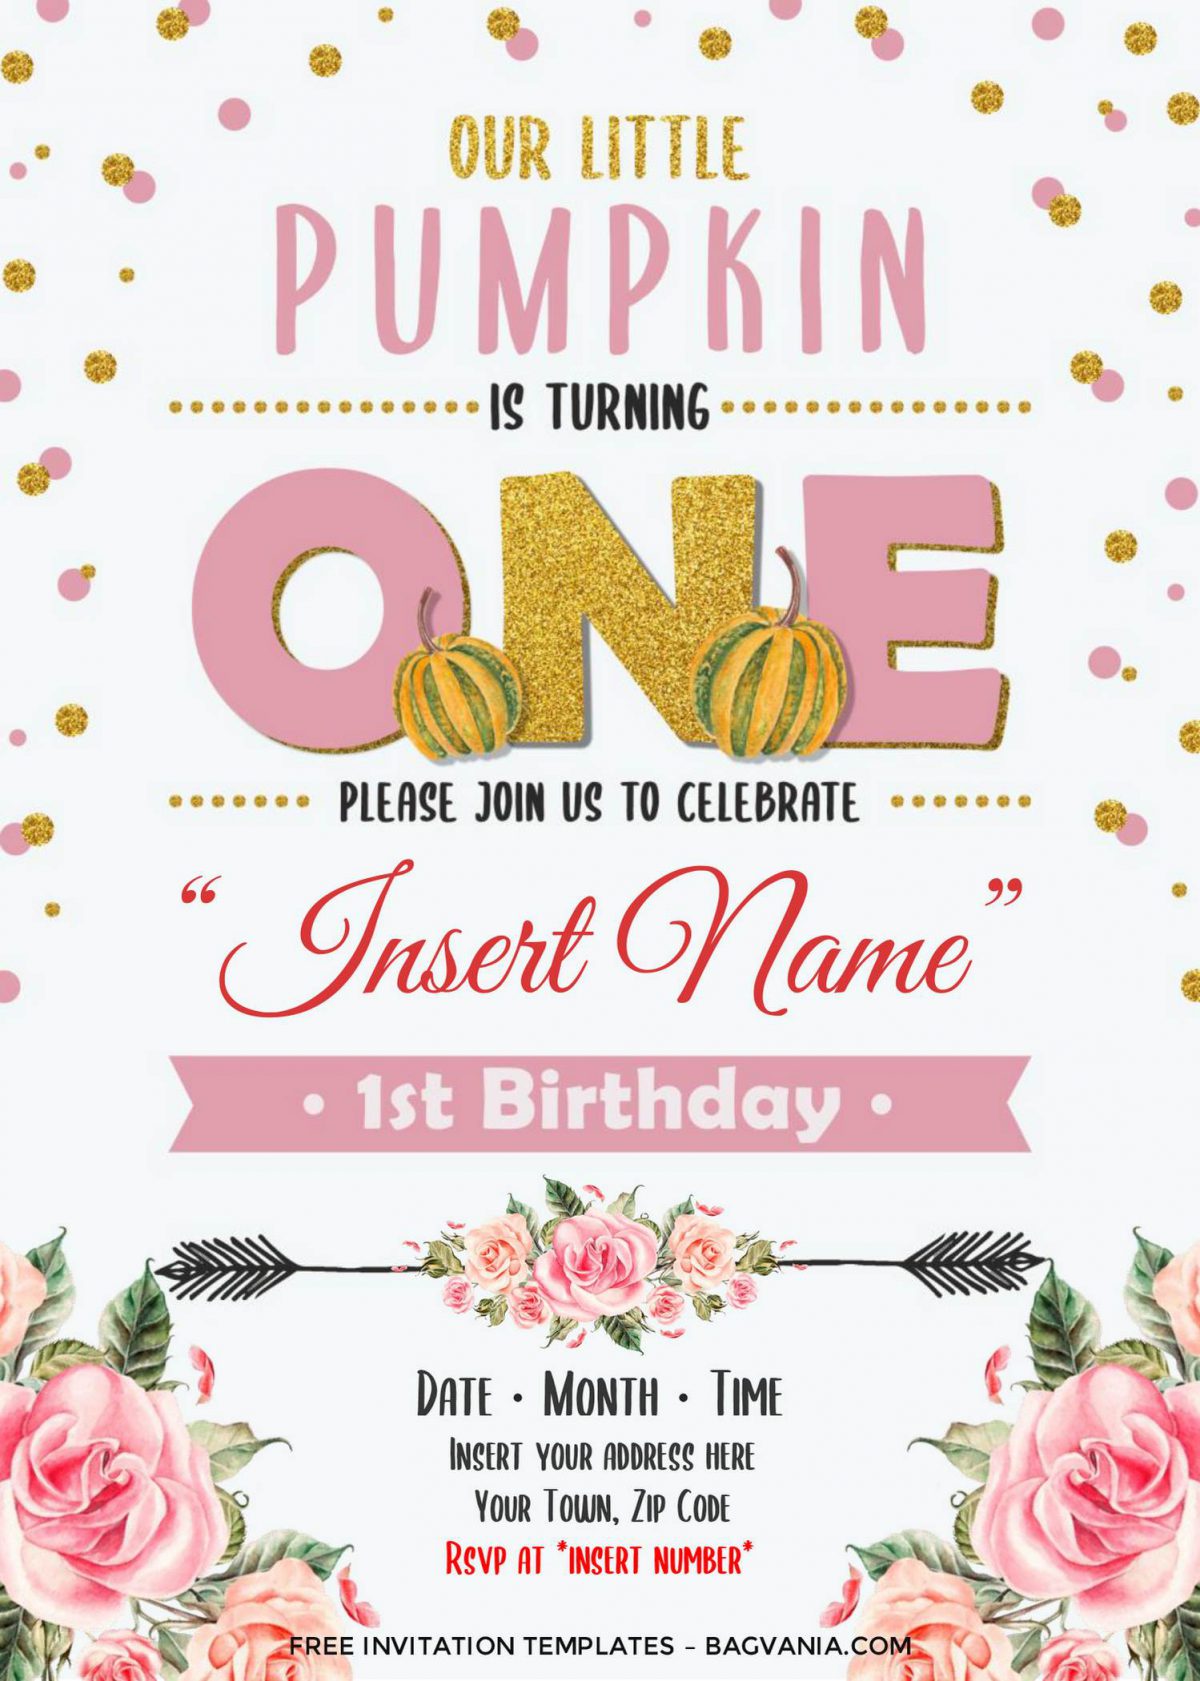 Free Pumpkin First Birthday Invitation Templates For Word